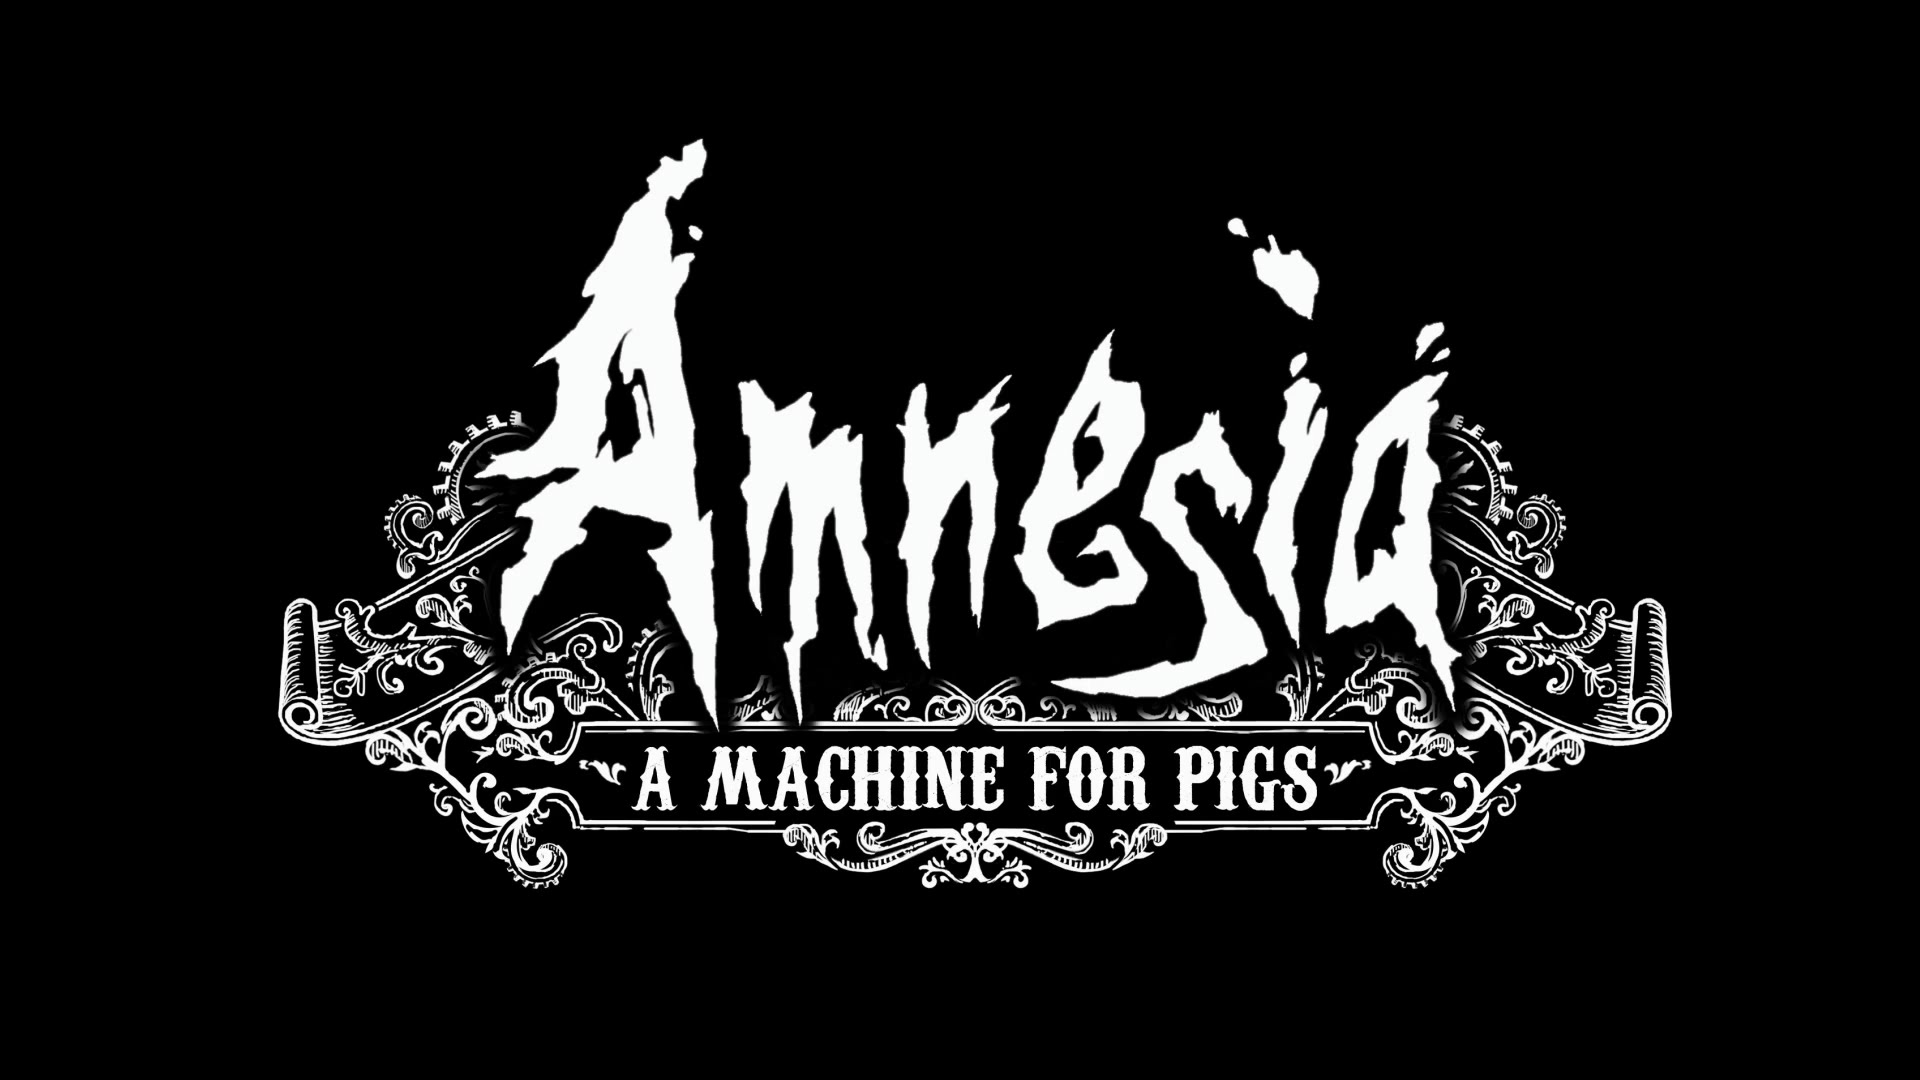 El "porc" cabró. Amnesia: A machine for pigs #6 de Senseller